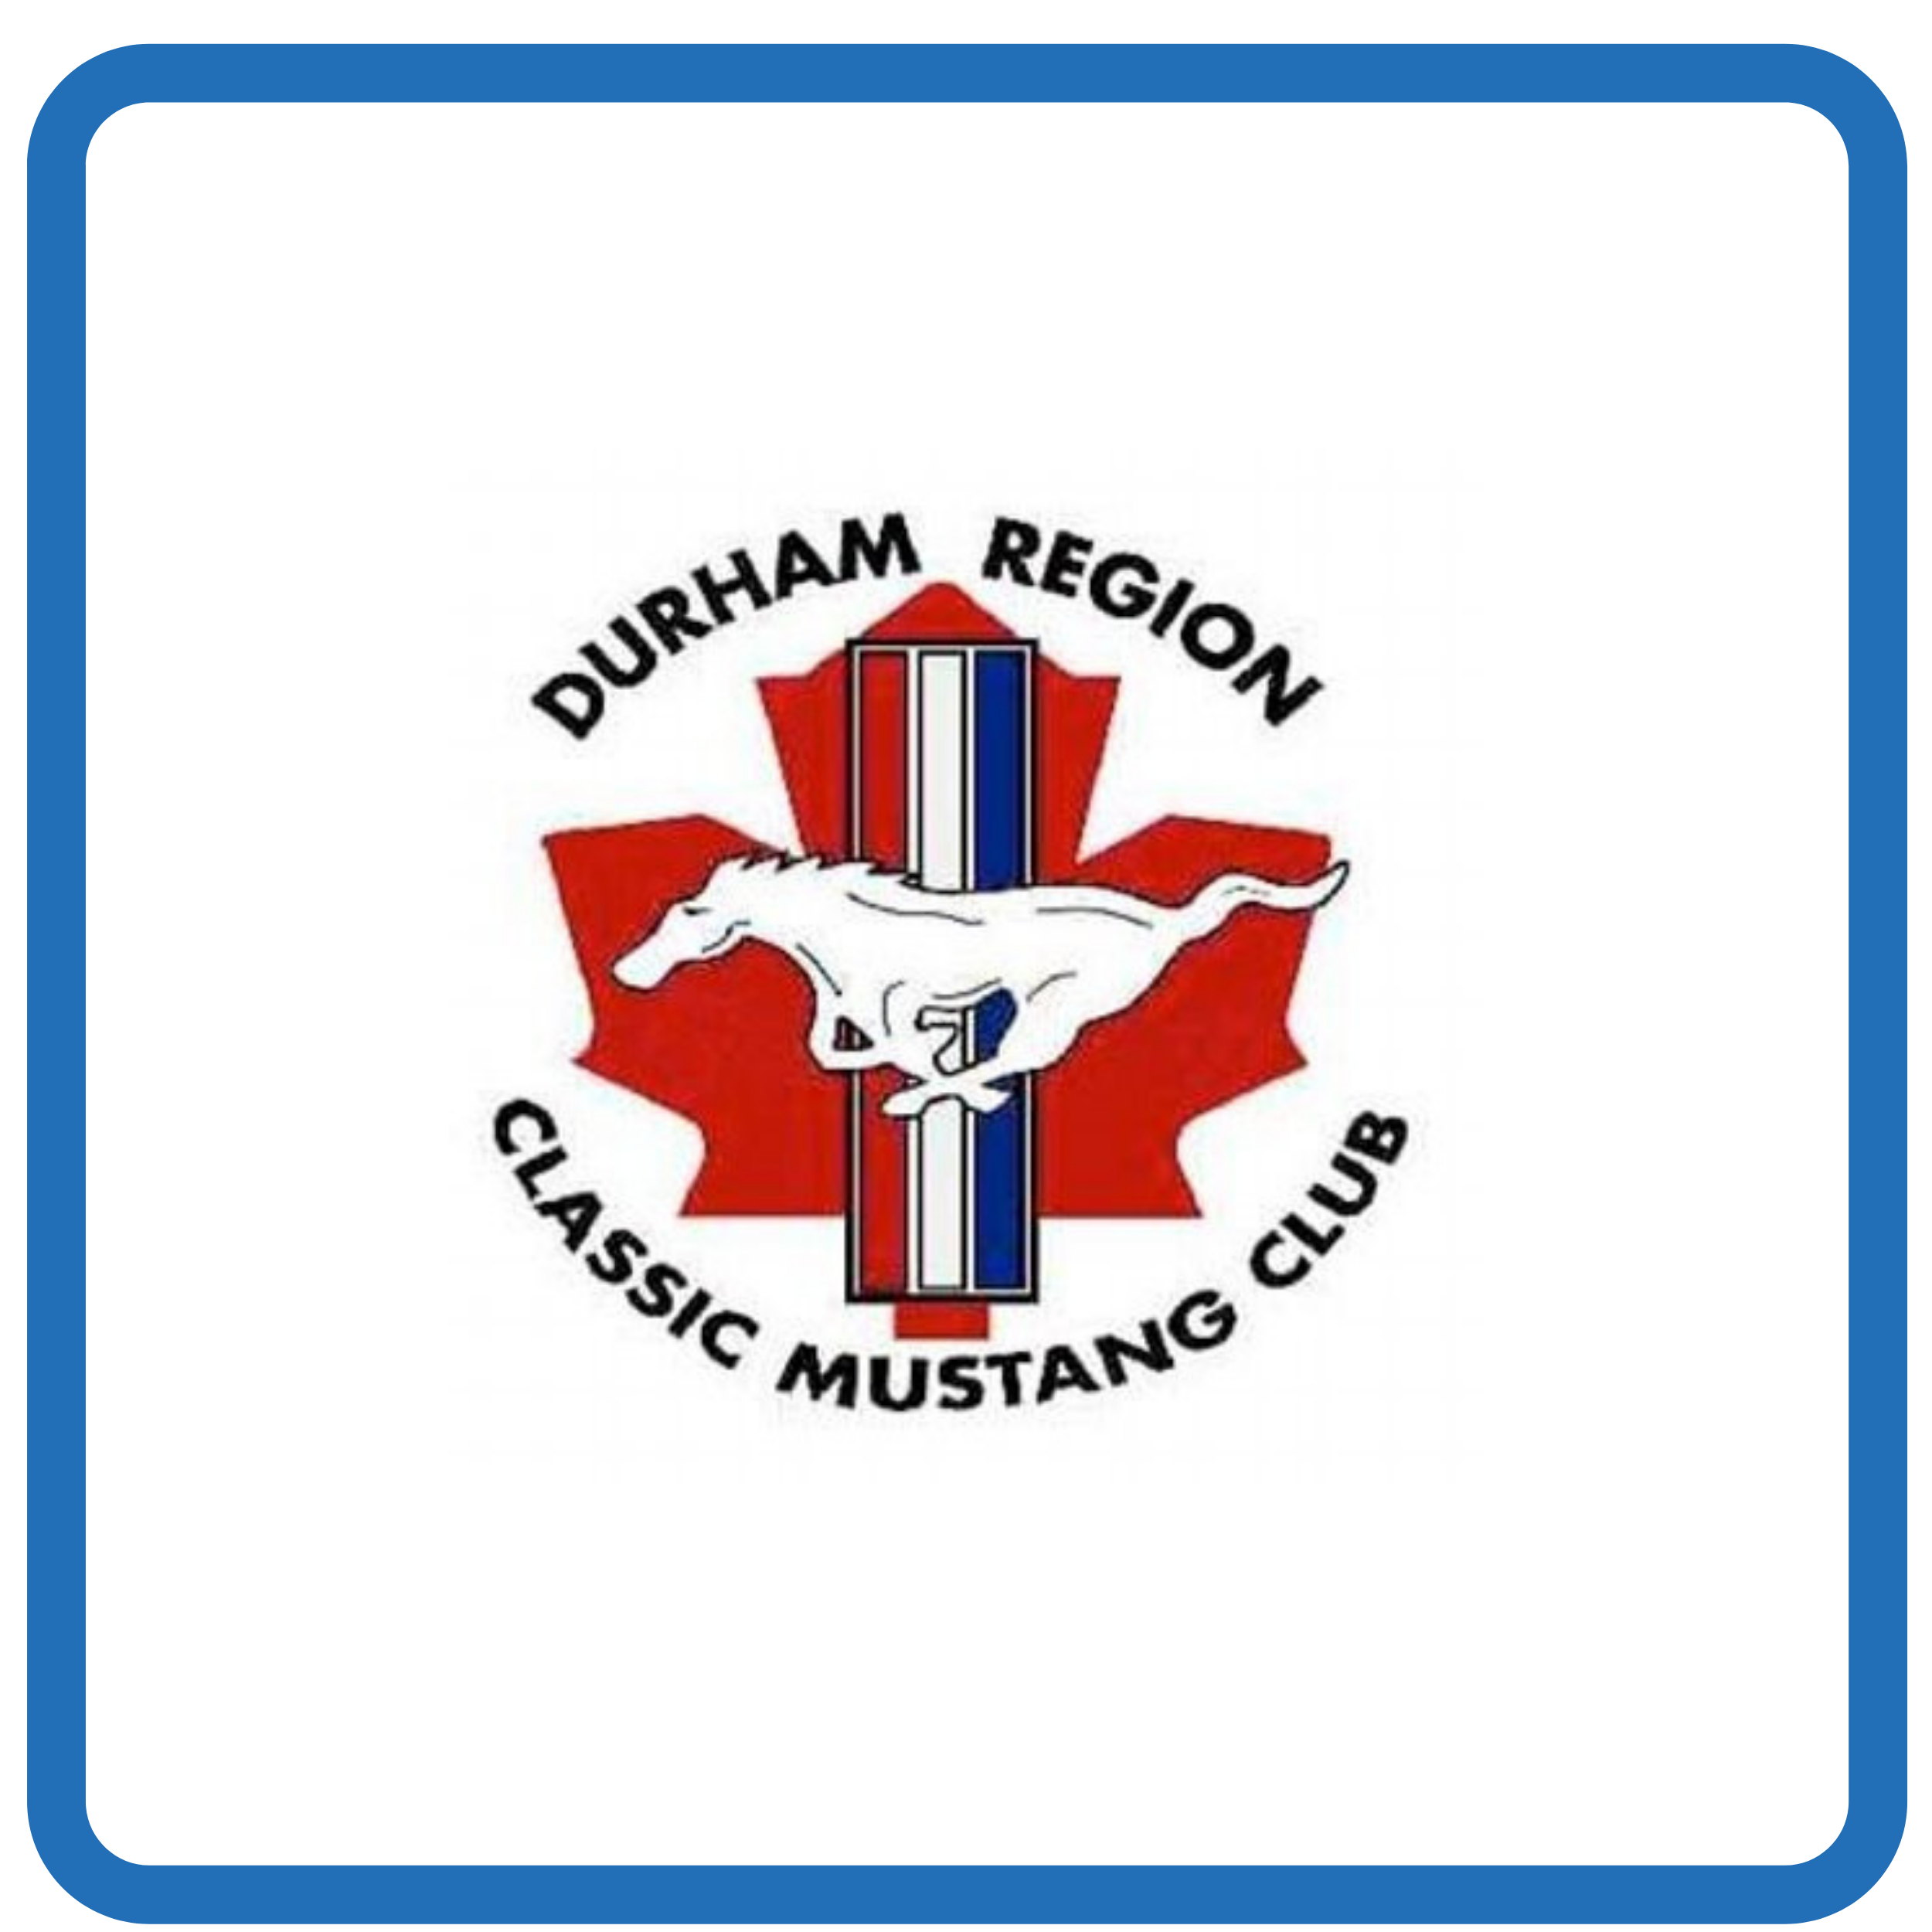 Durham Region Classic Mustang Club